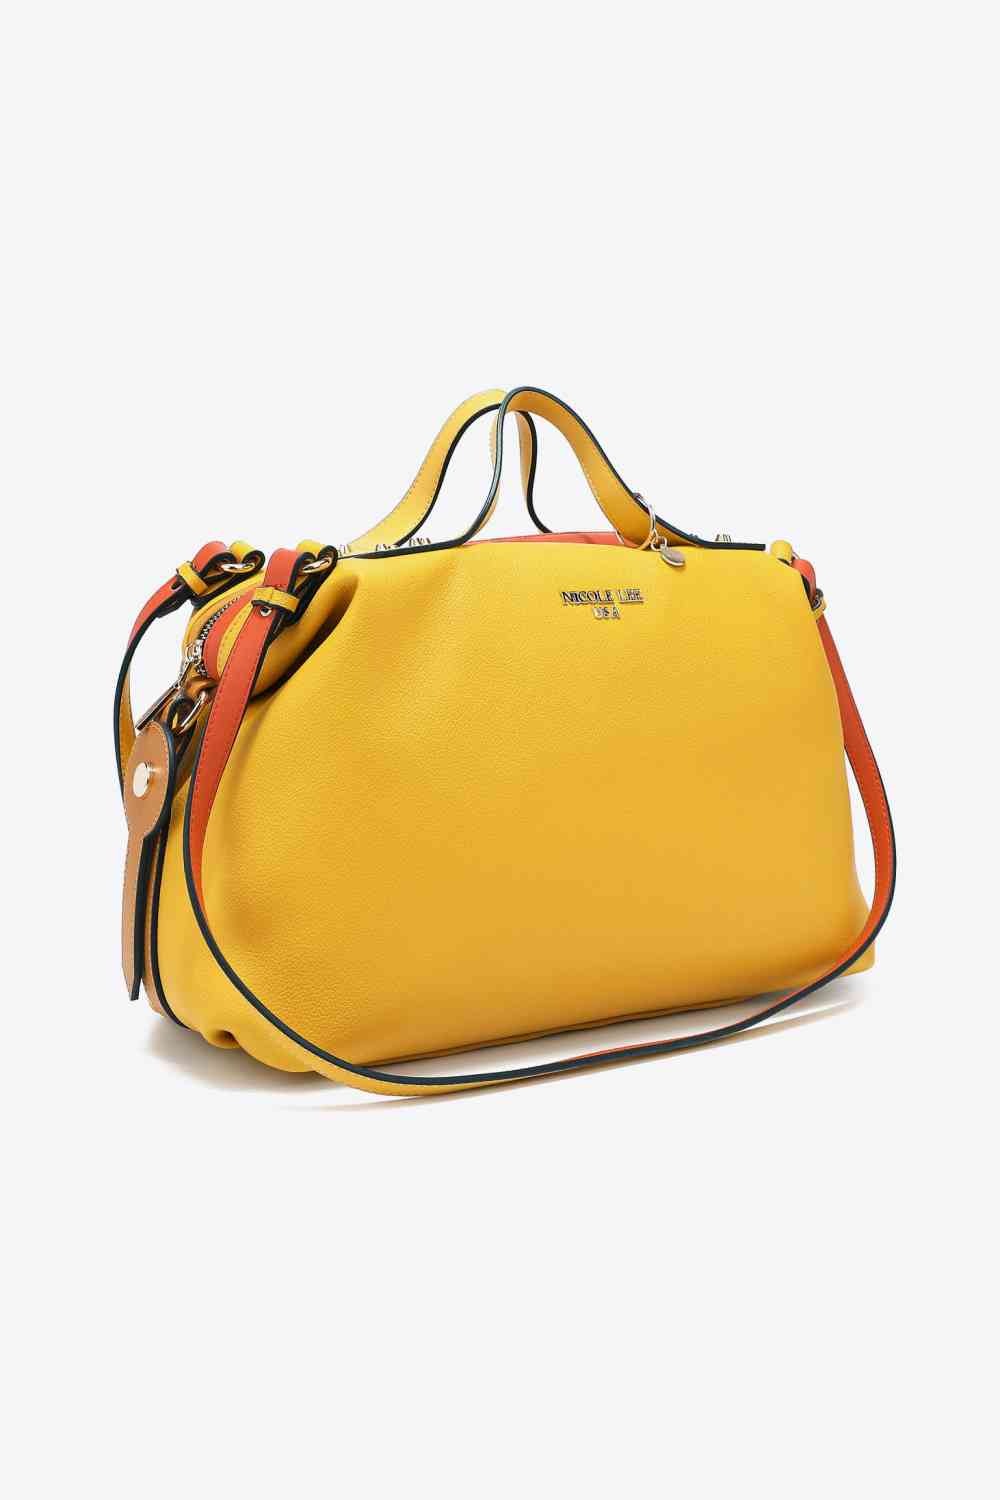 Nicole Lee USA Avery Multi Strap Boston Bag Yellow One Size